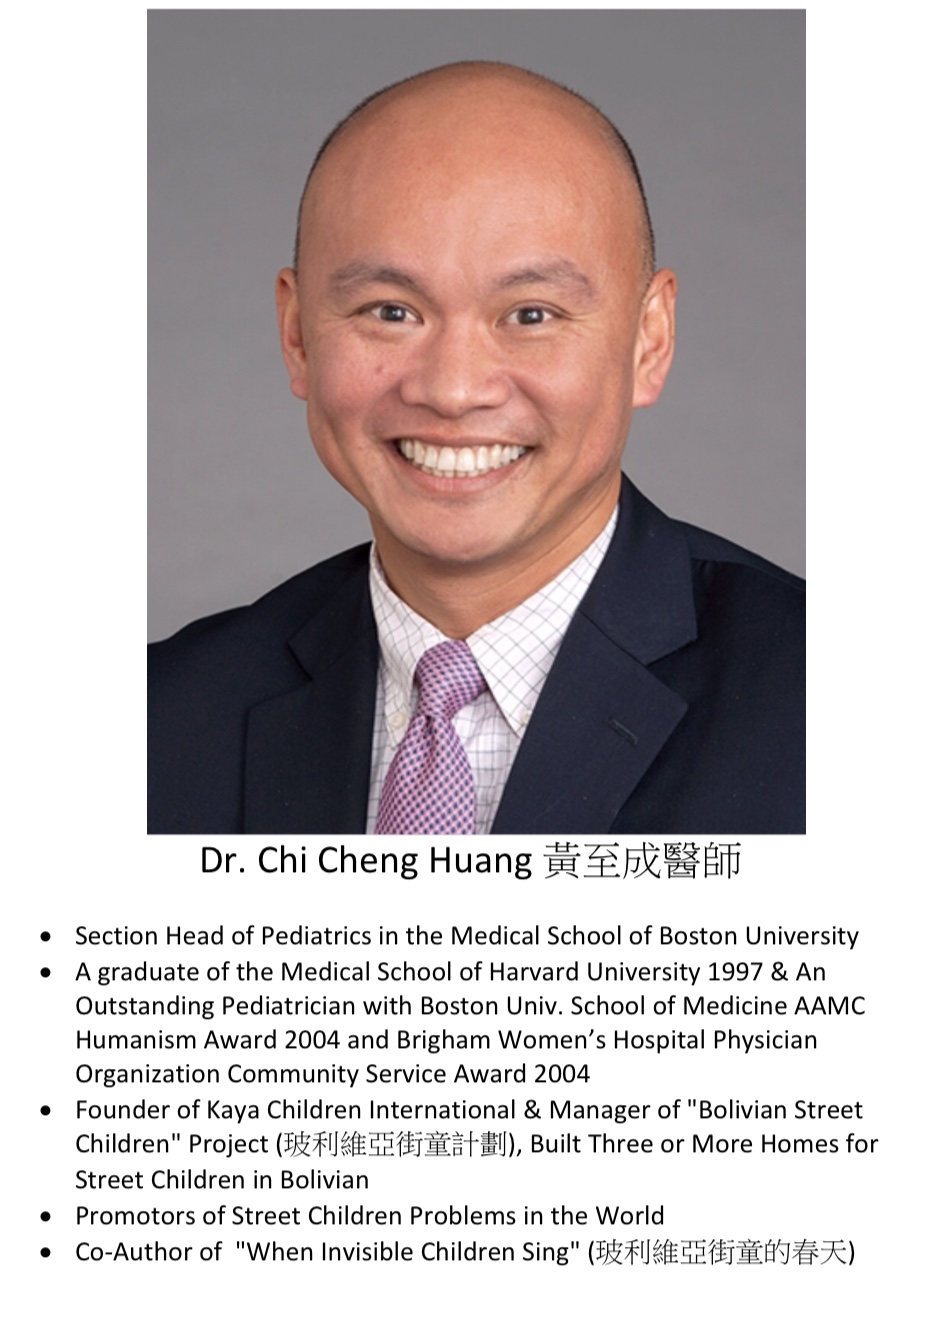 236. Dr. Chi Cheng Huang 黃至成醫師